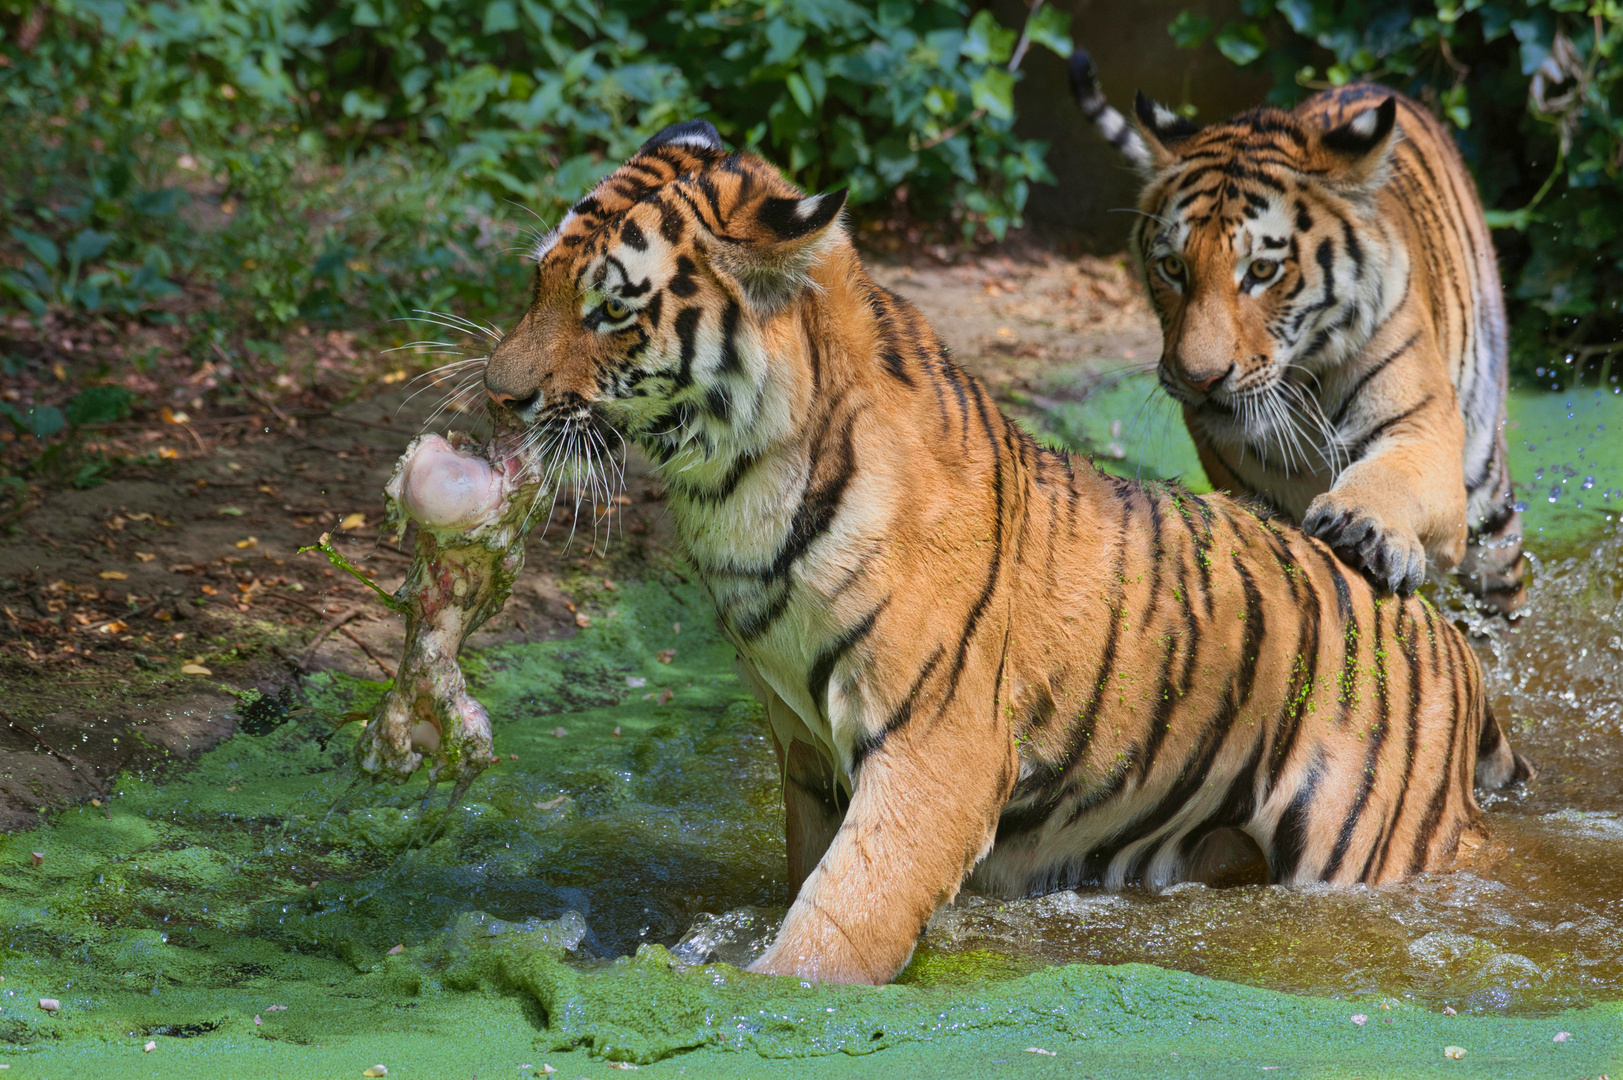 Sibirische Tiger (Panthera tigris altaica) im Duisburger Zoo